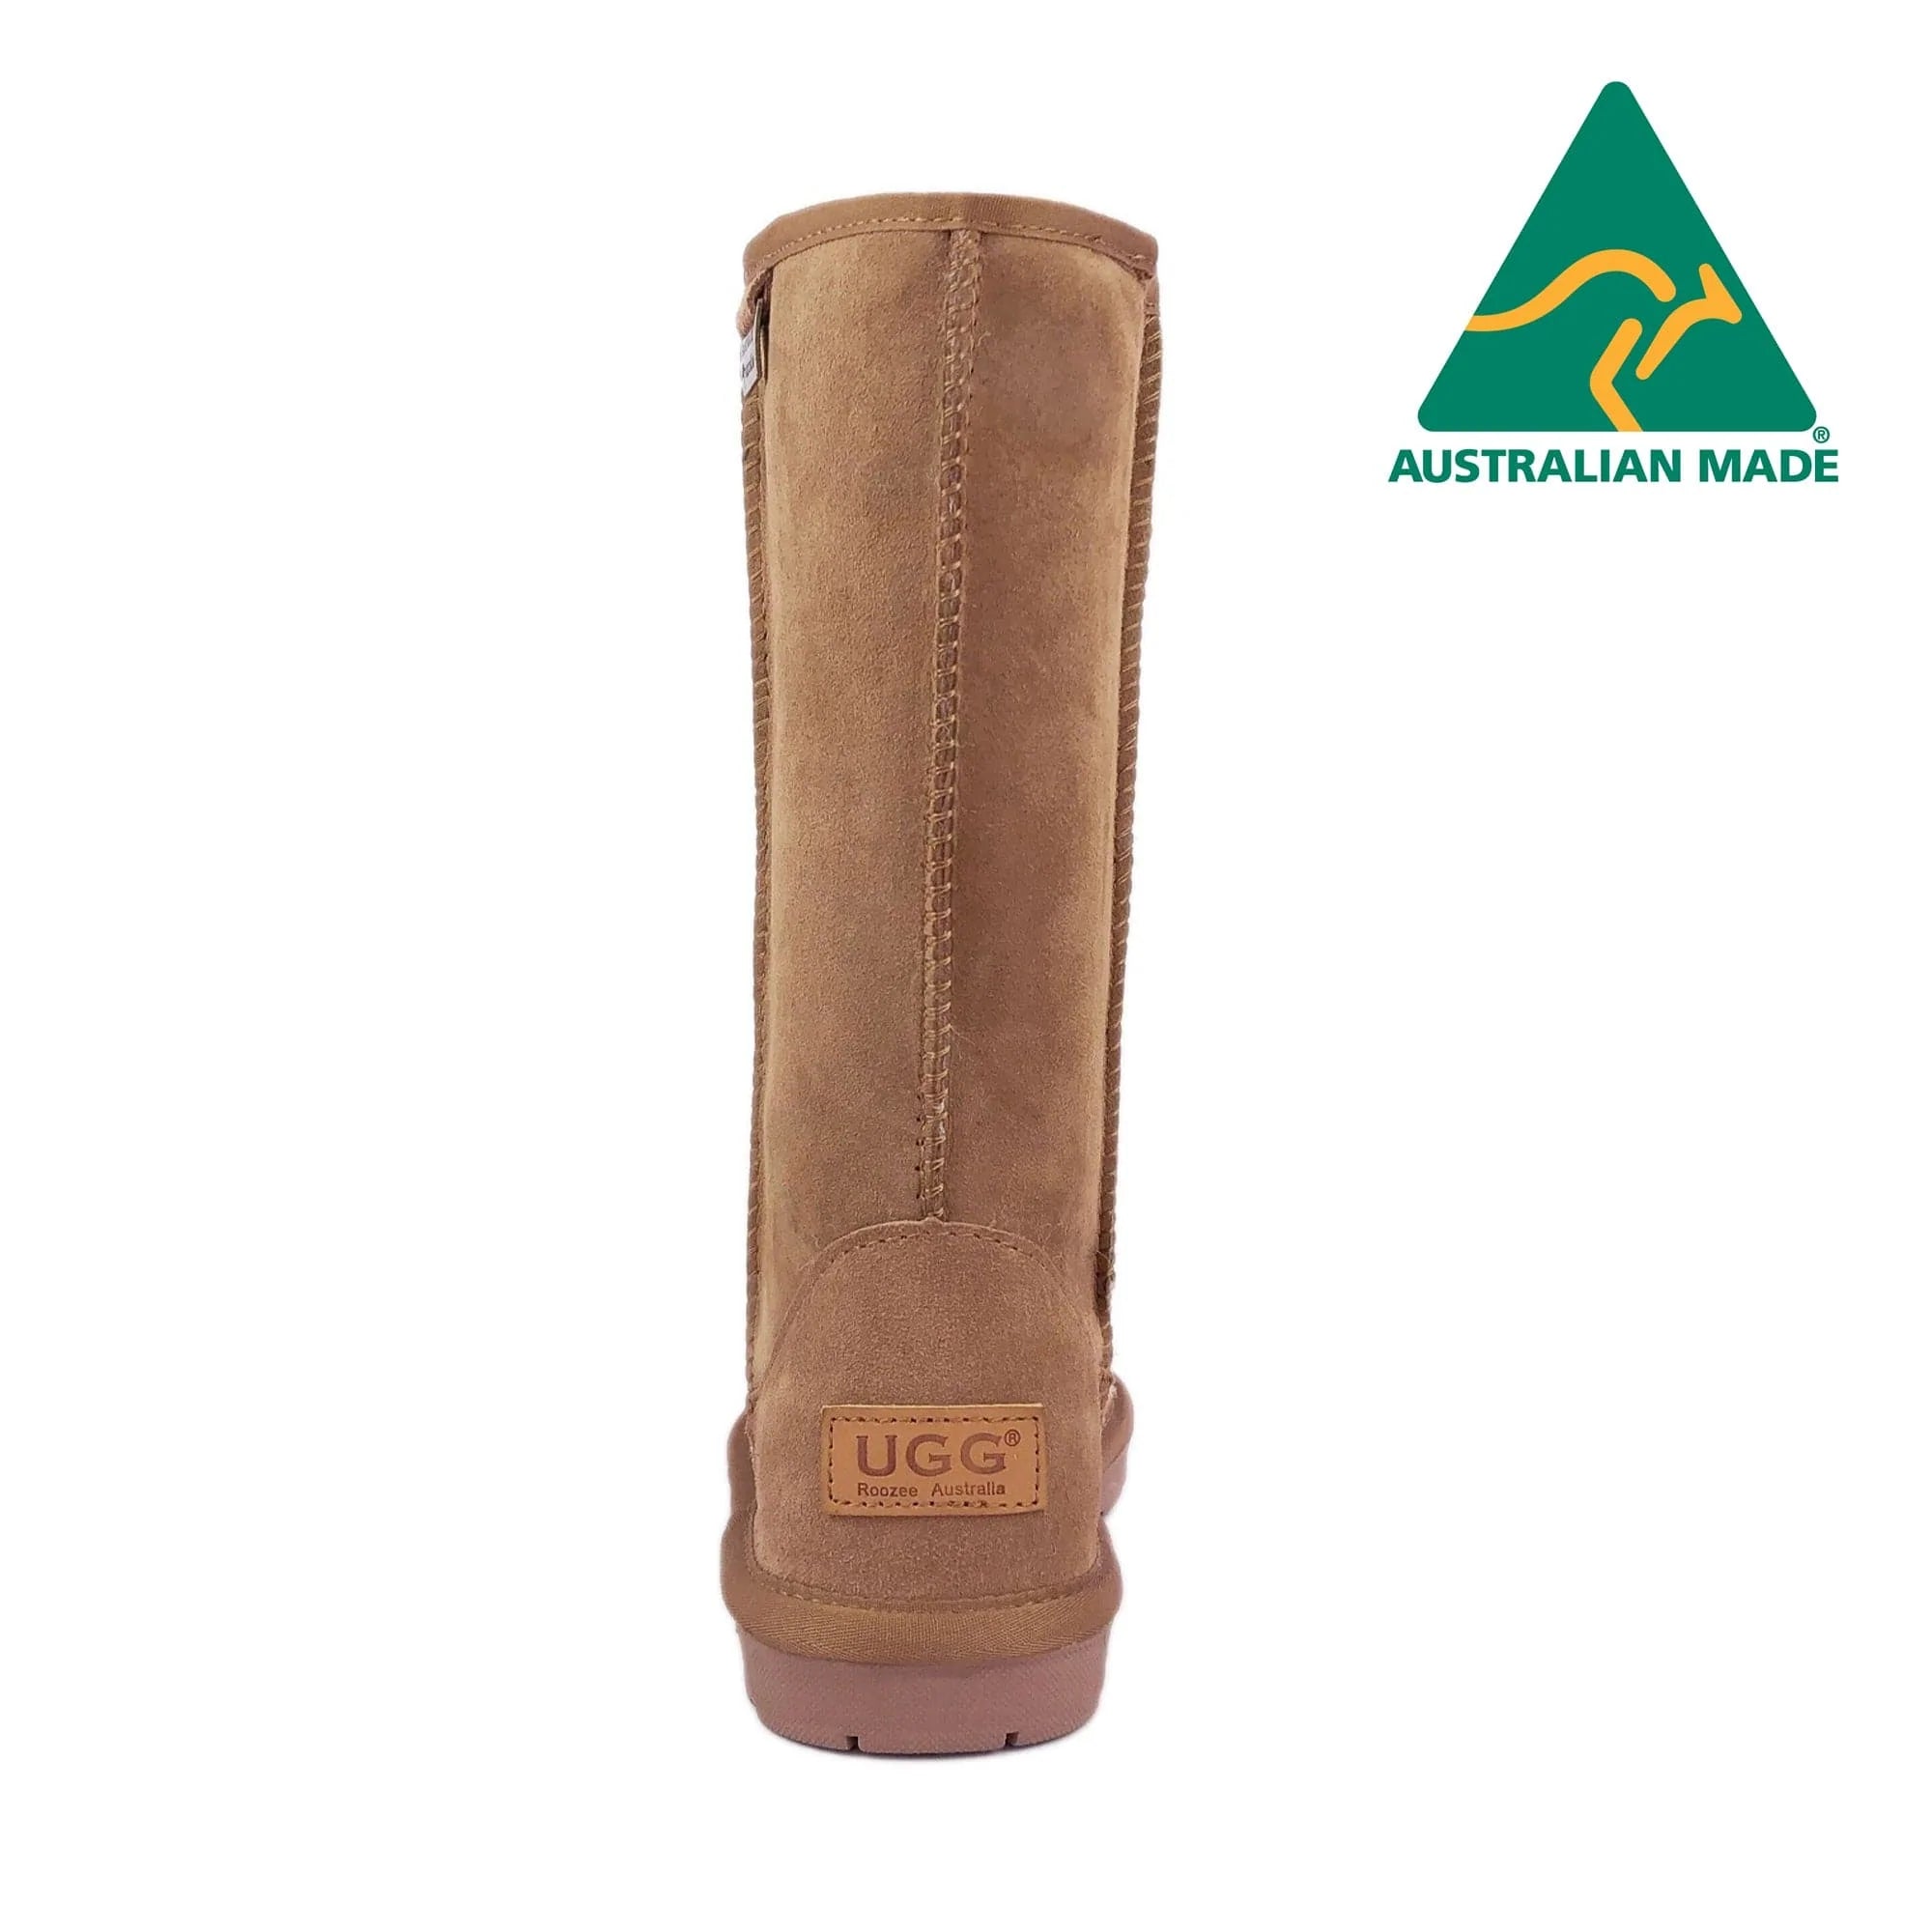 Ugg Boots - UGG Roozee Tall Classic Boot-Australian Made - Original UGG Australia Classic